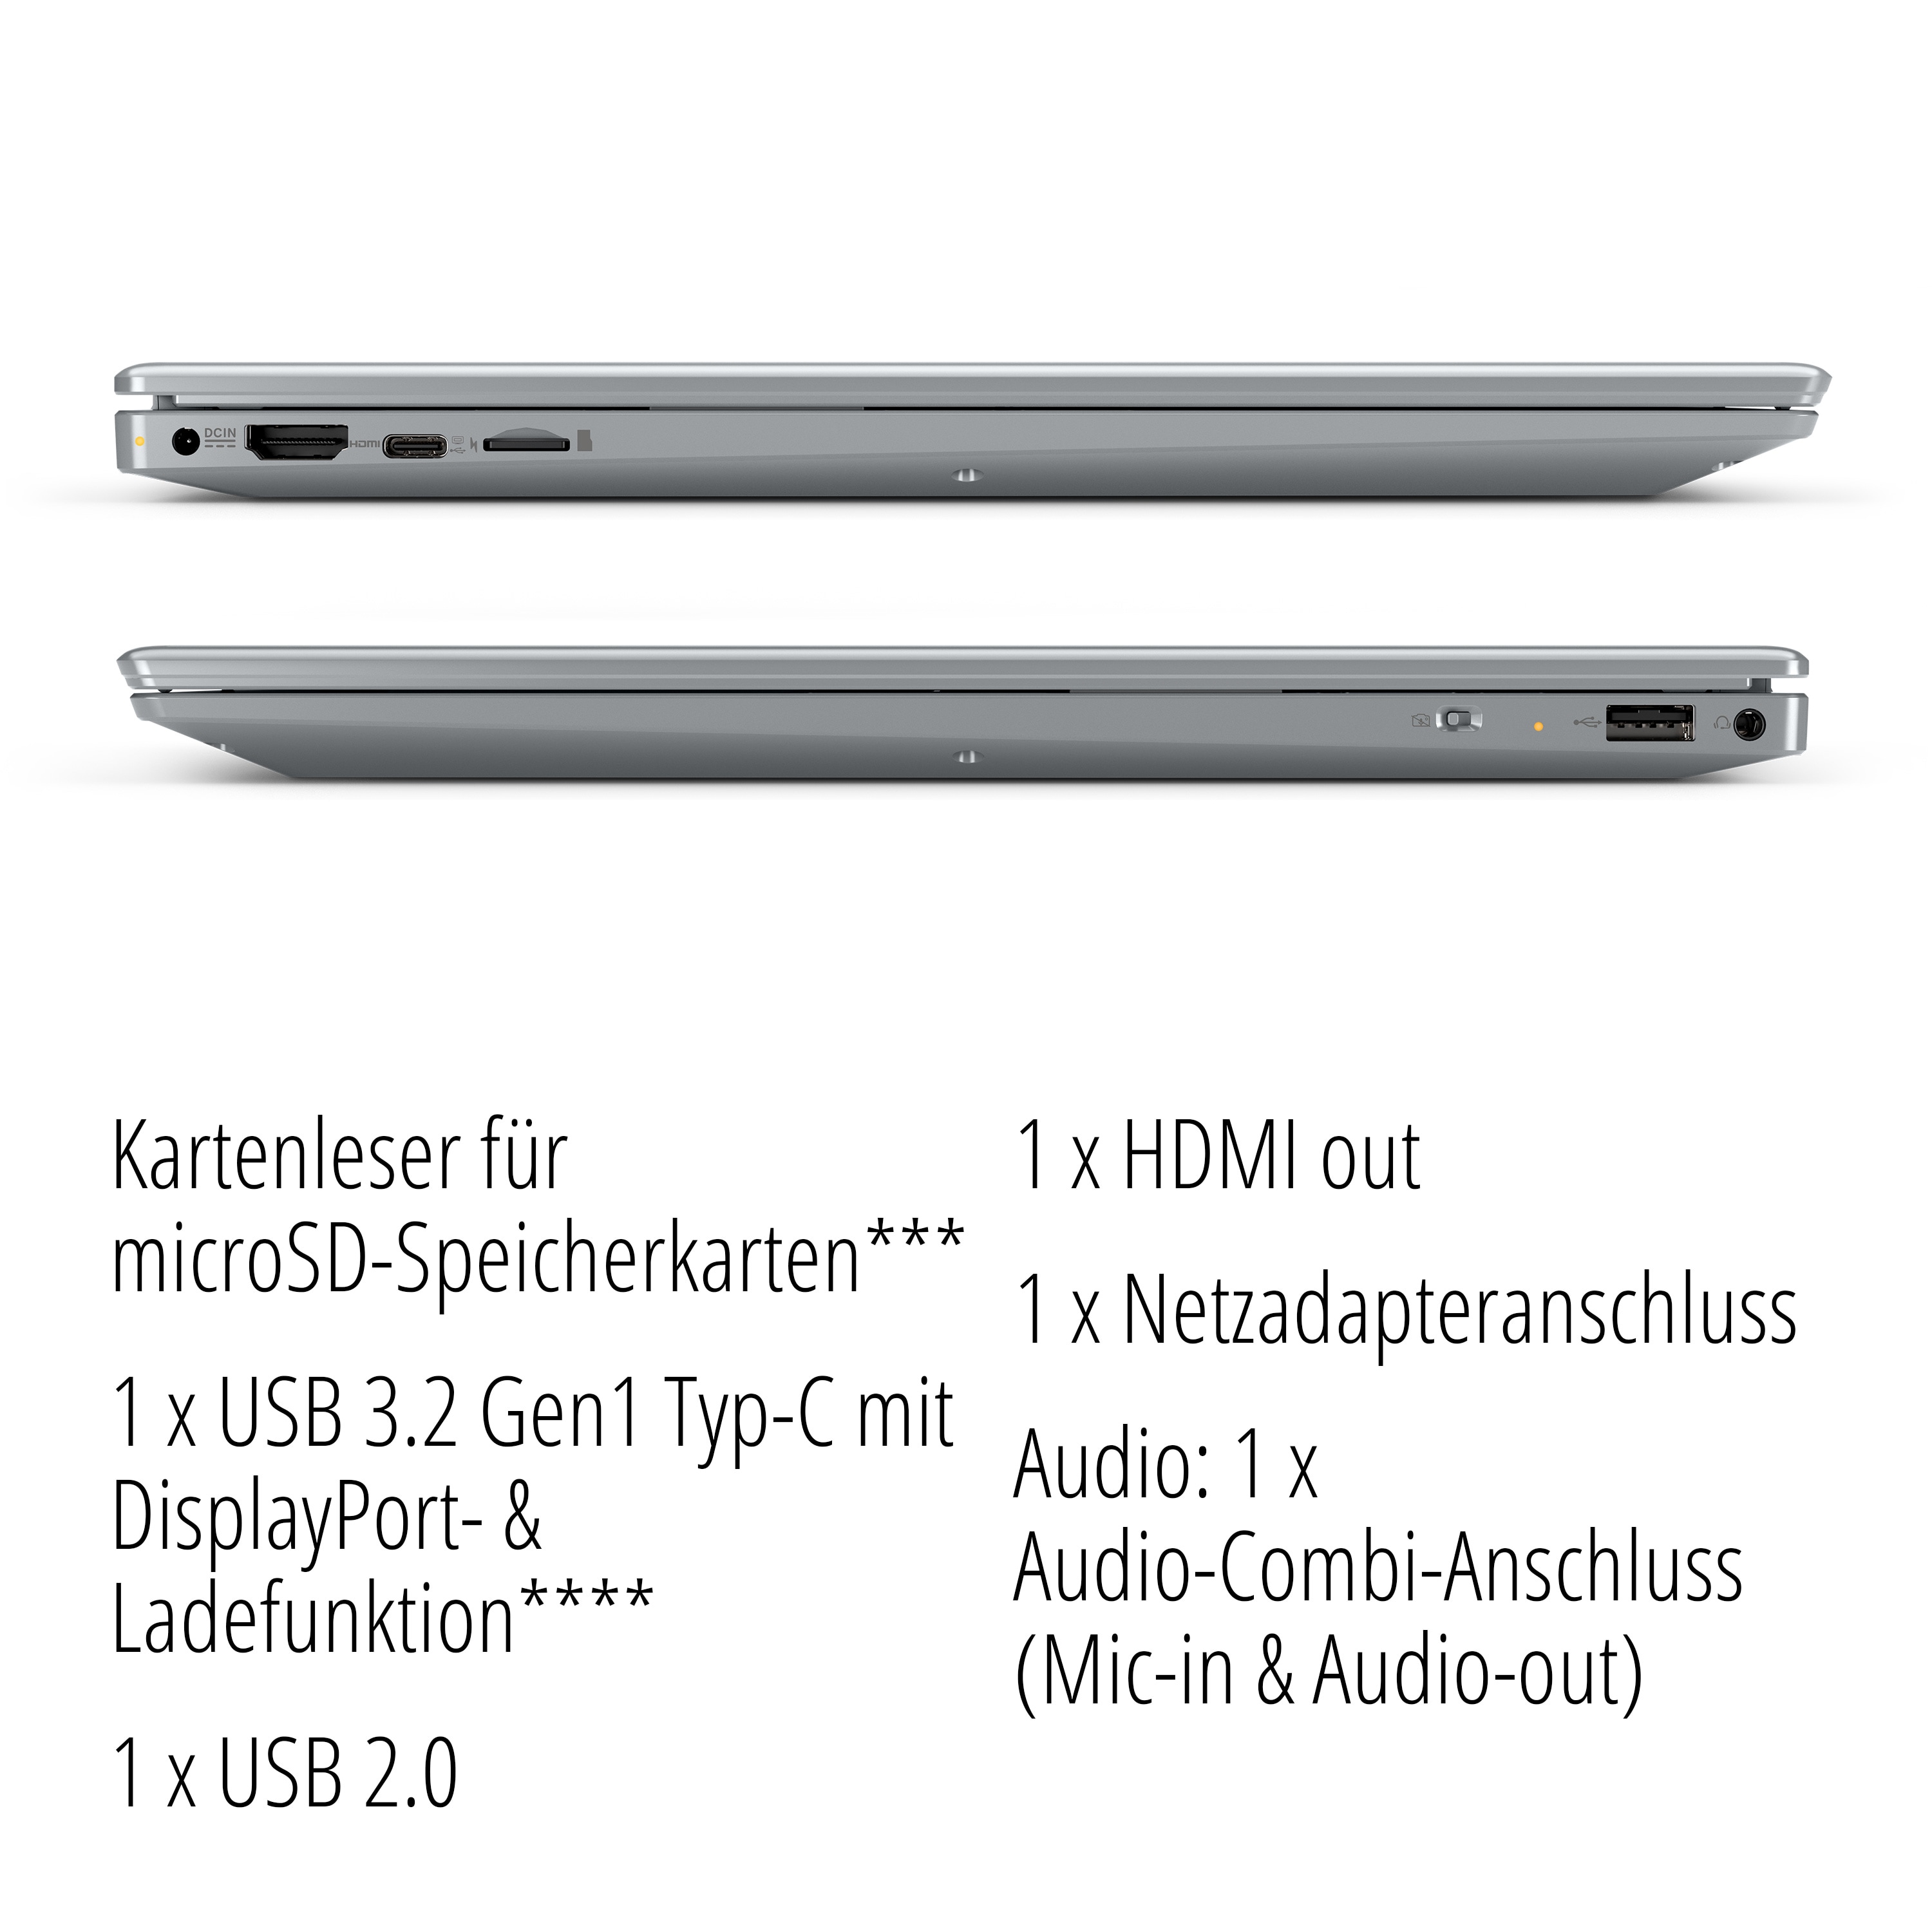 MEDION® E15309 Laptop, AMD Ryzen™ 7 5700U, Windows 11 Home (S Modus), 39,6 cm (15,6'') FHD Display, 1 TB SSD, 16 GB RAM